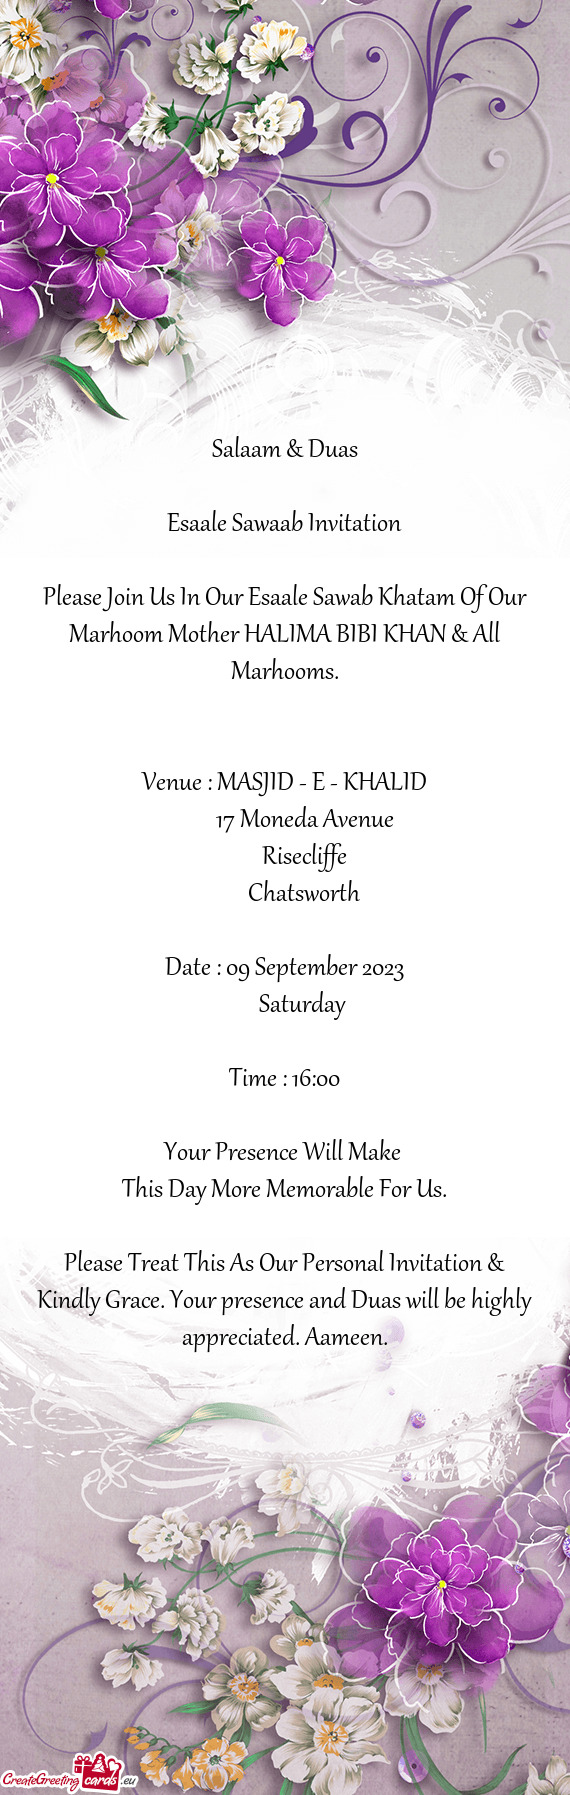 Please Join Us In Our Esaale Sawab Khatam Of Our Marhoom Mother HALIMA BIBI KHAN & All Marhooms